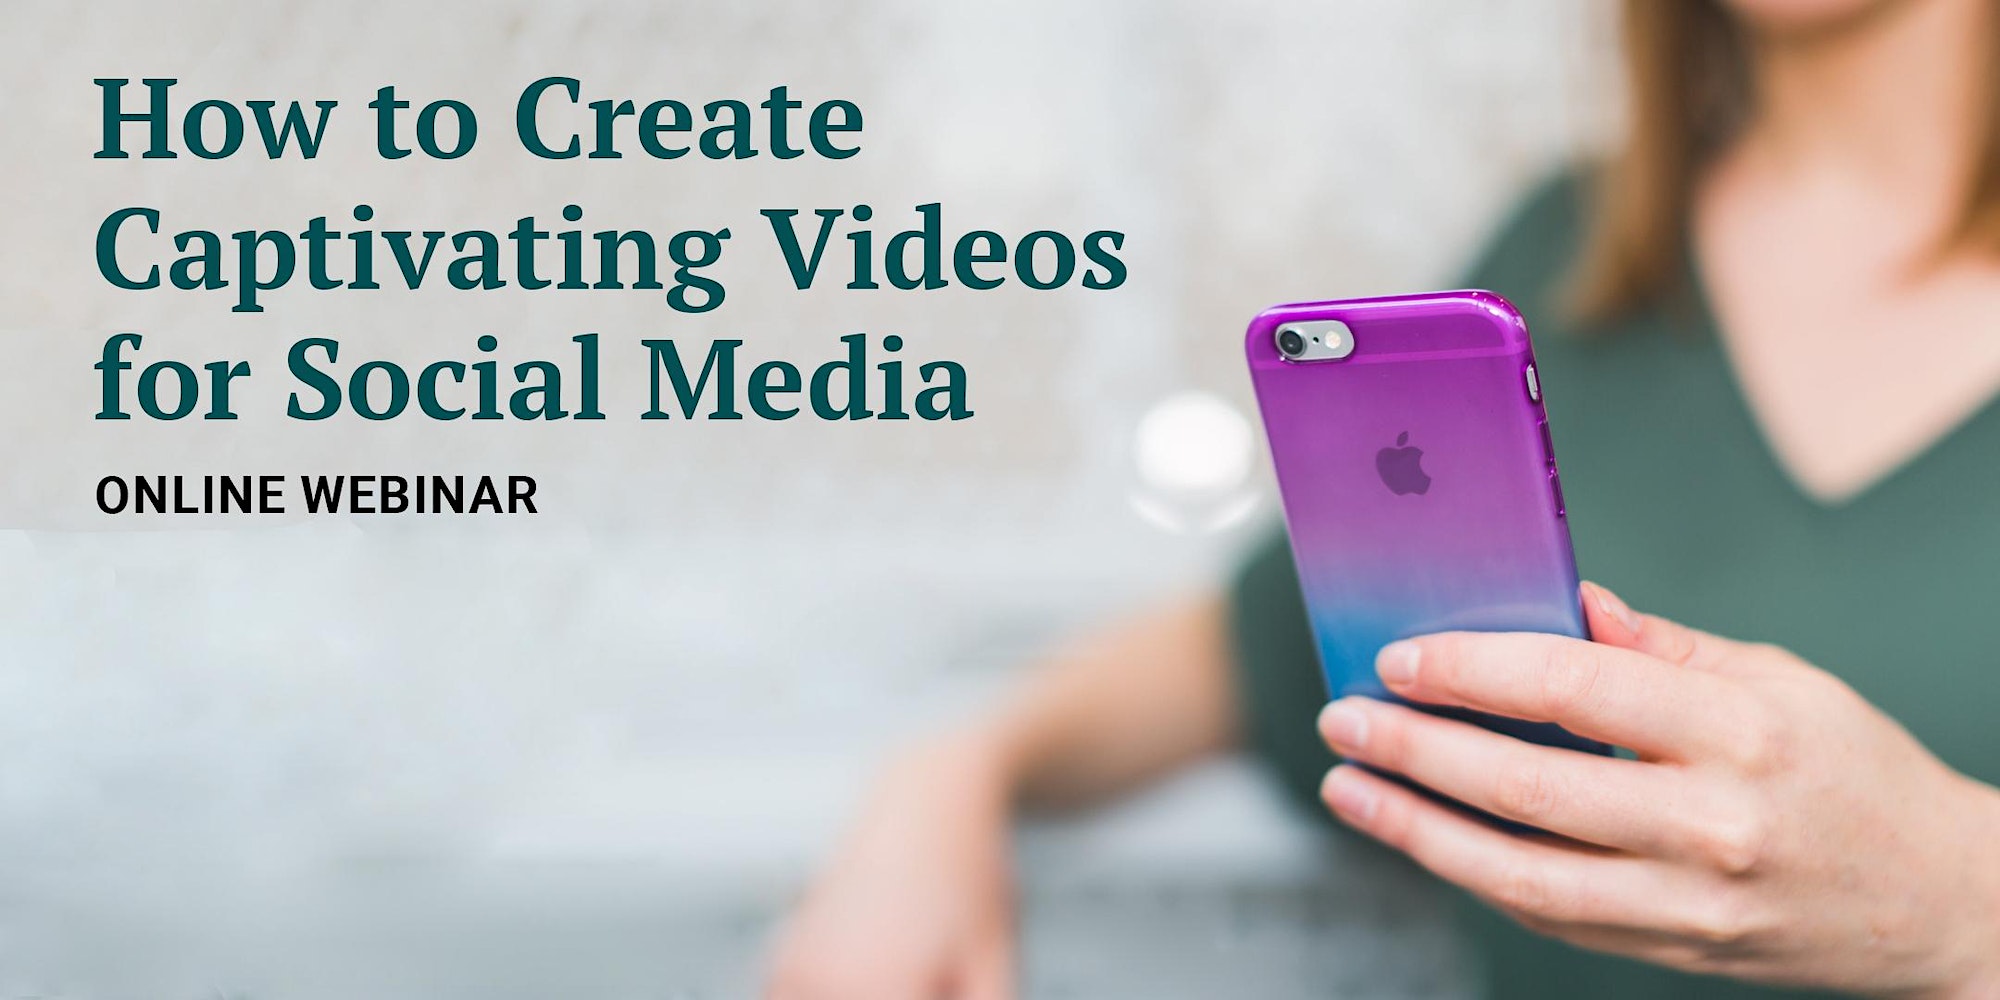 How to Create Captivating Videos for Social Media: Online Webinar